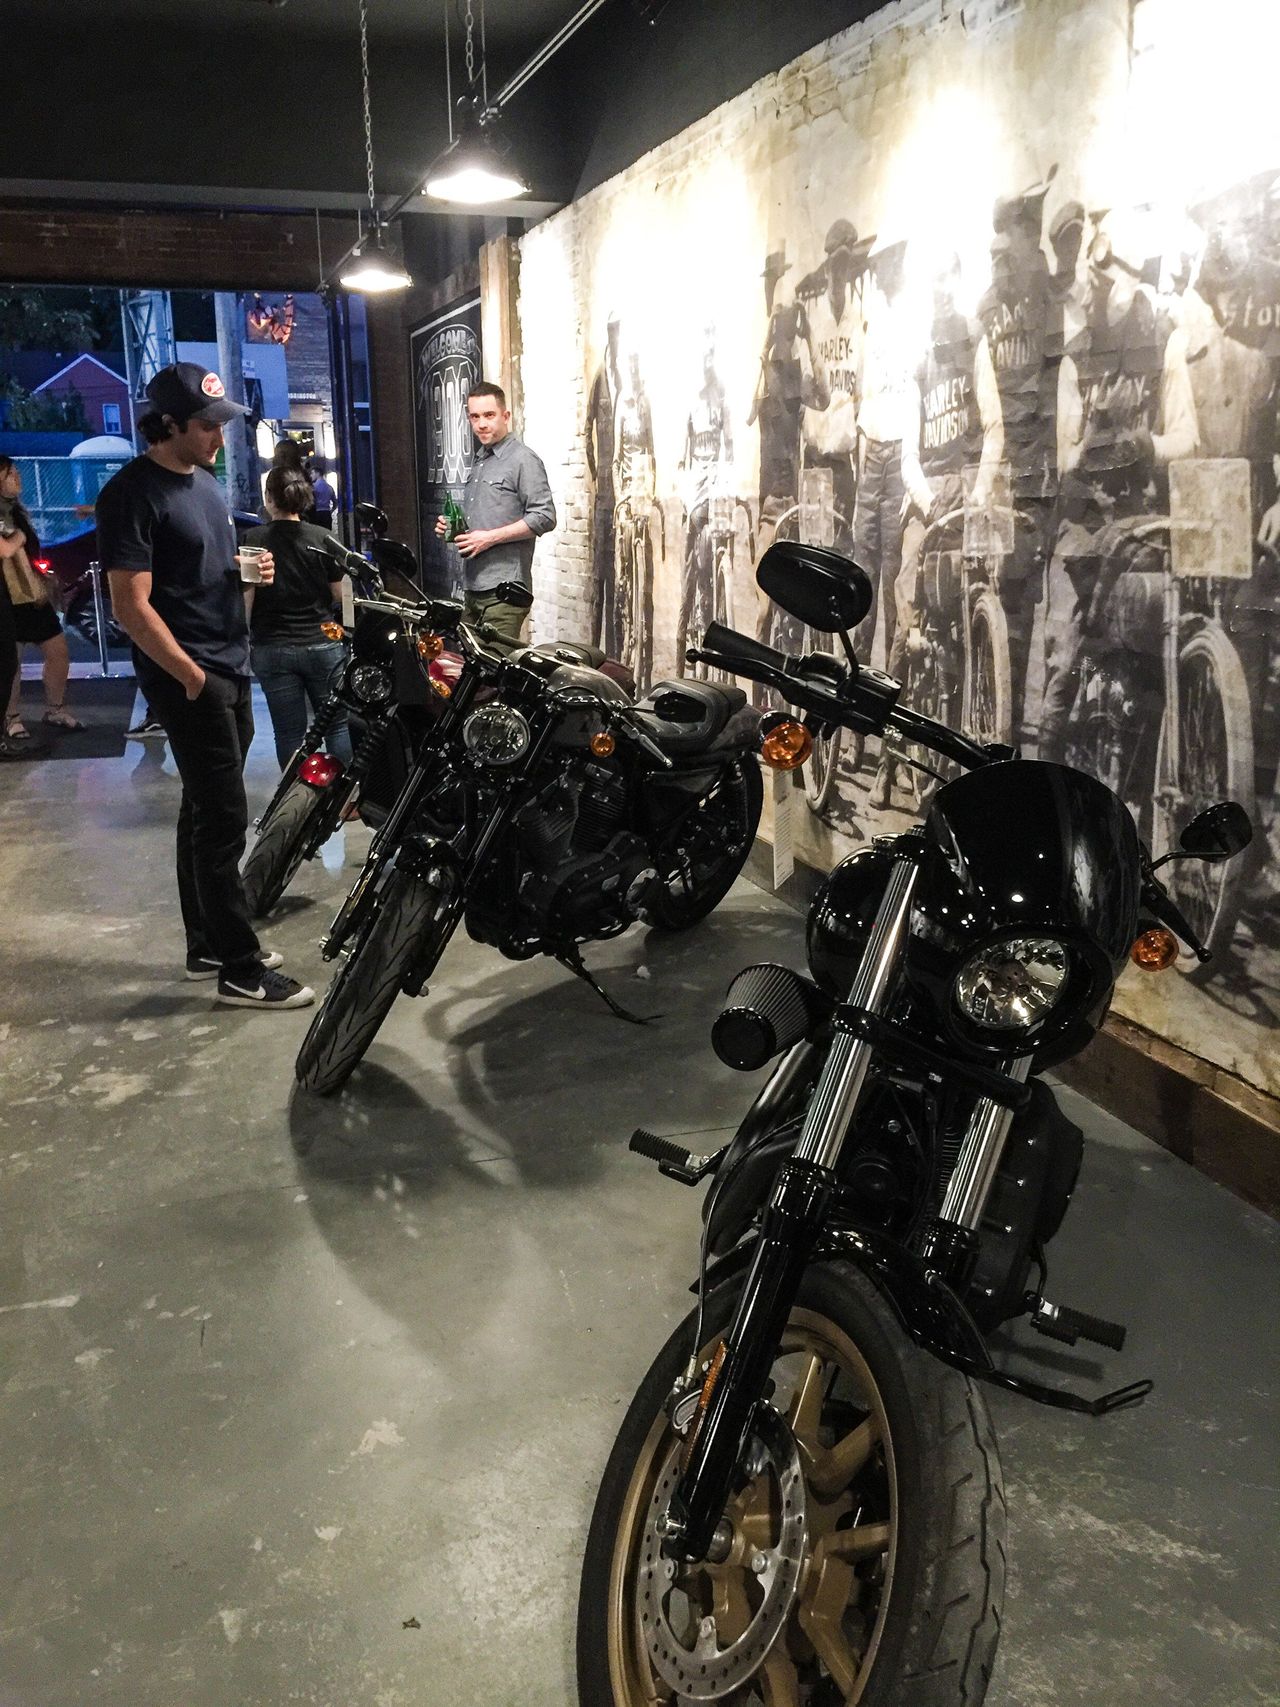 Entering the 1903 Harley-Davidson Café in Toronto